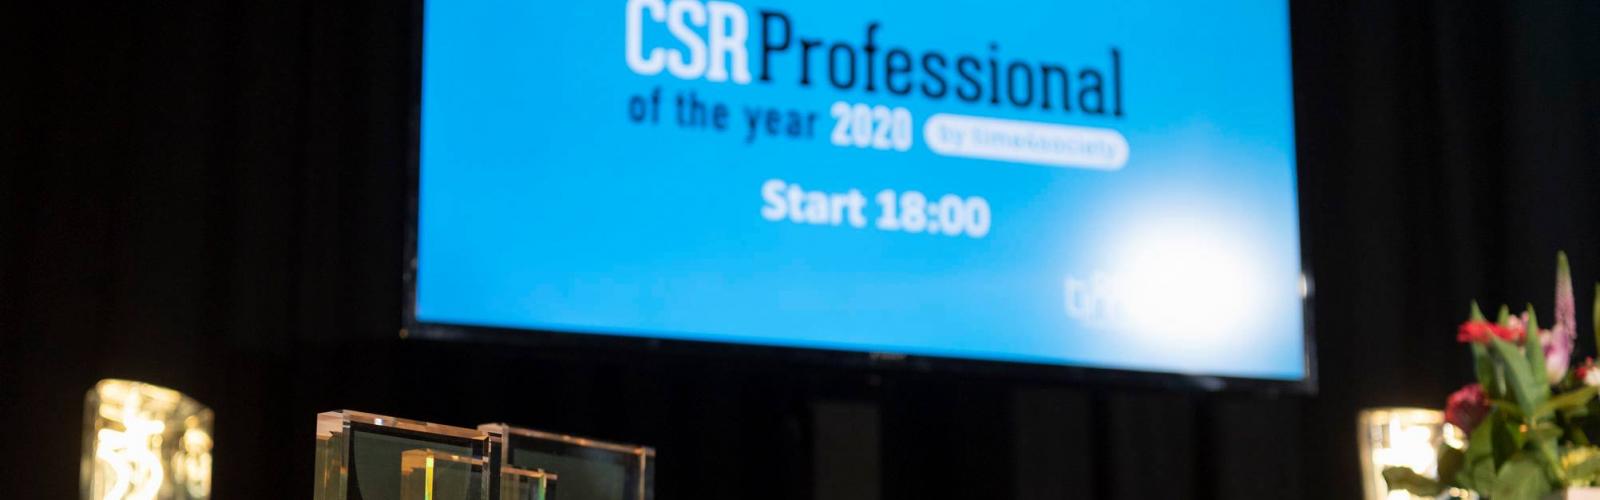 startbeeld CSR Professional of the Year